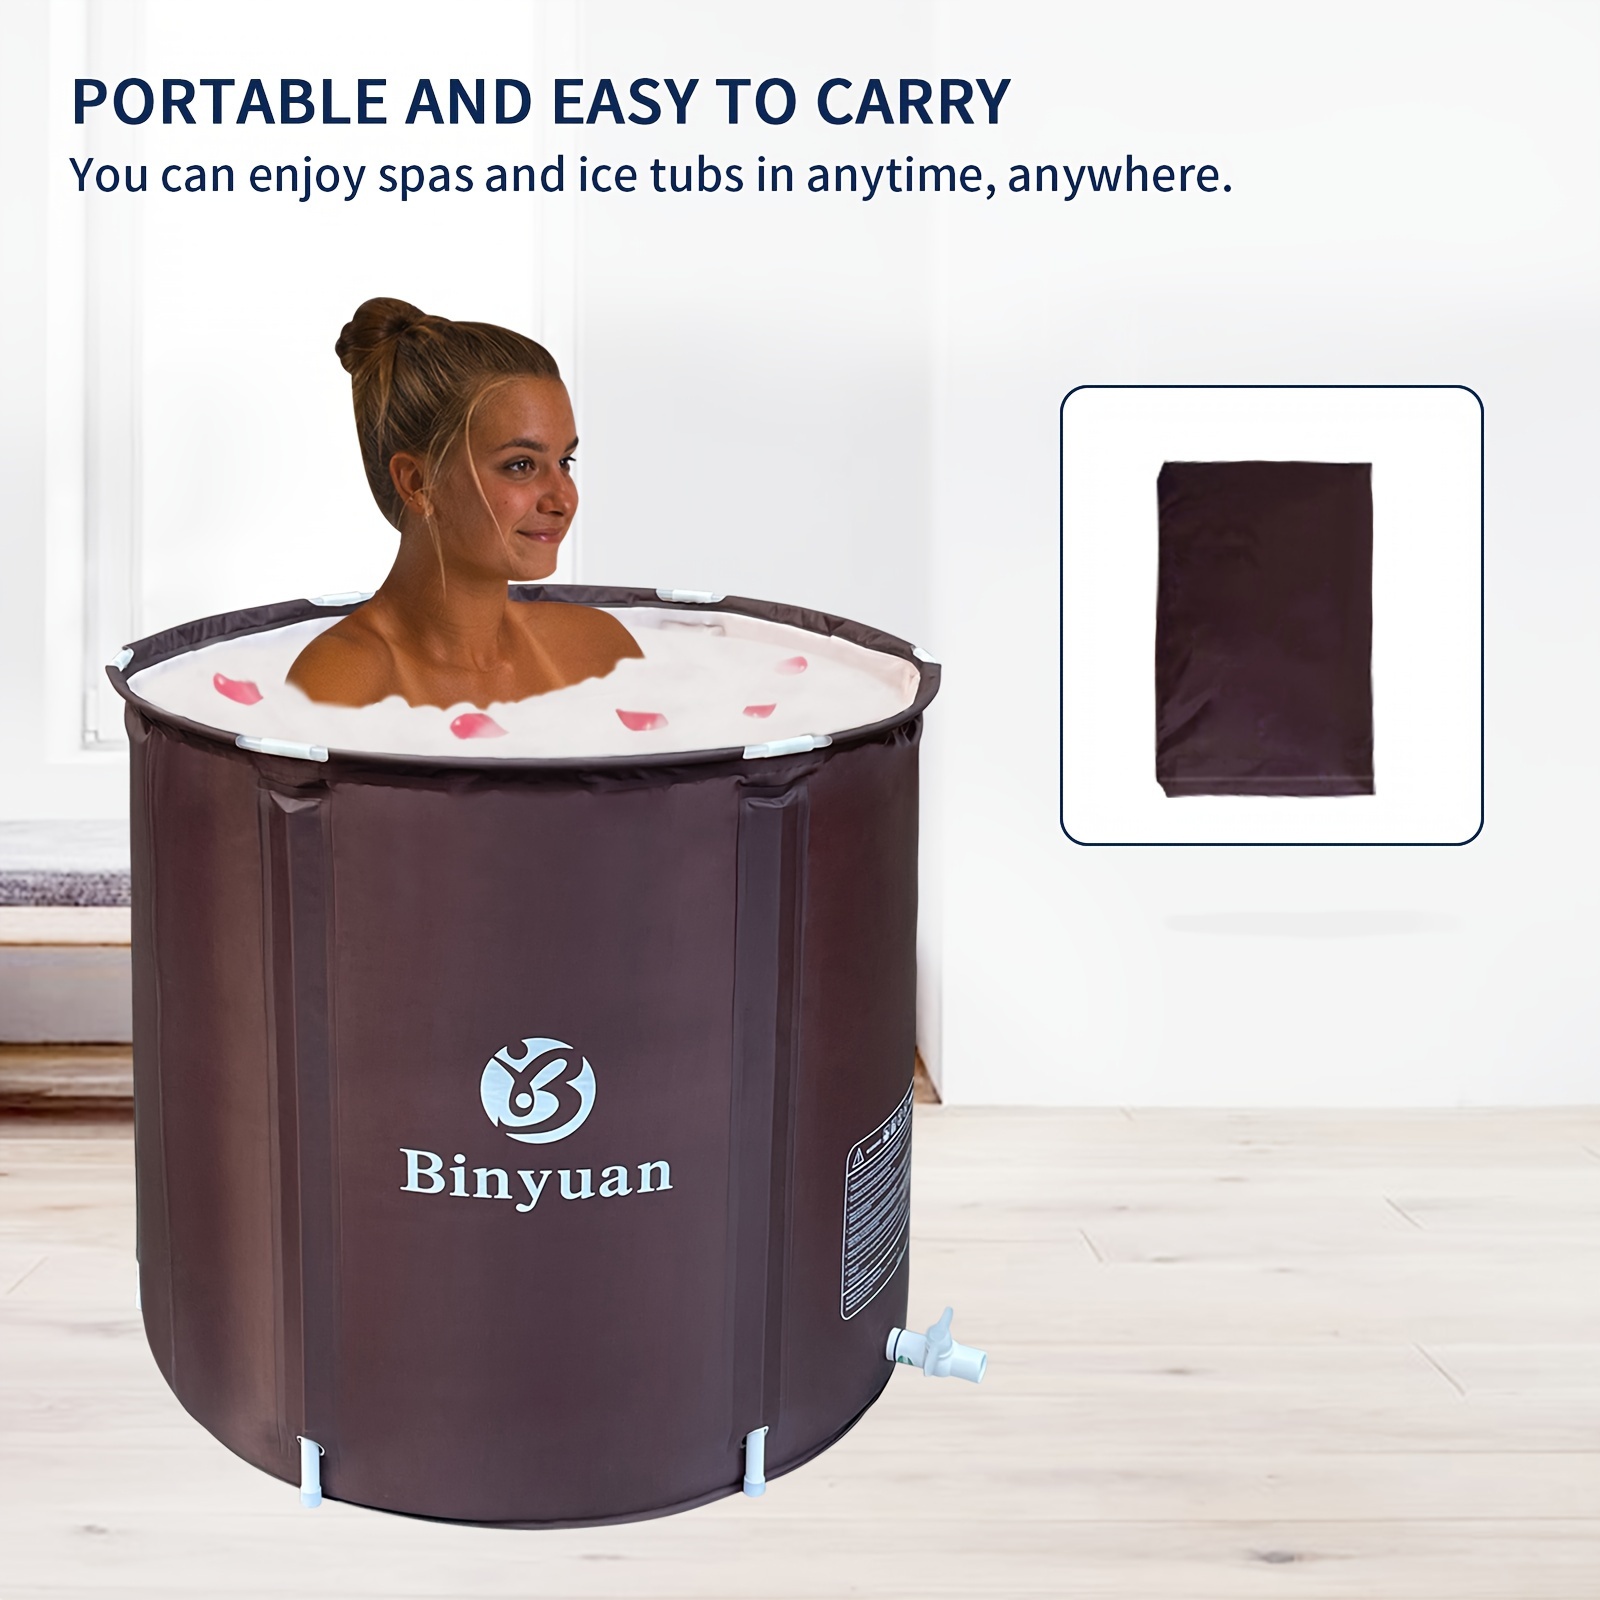 Bathtub Adults Large Freestanding Portable Plastic Shower Bucket